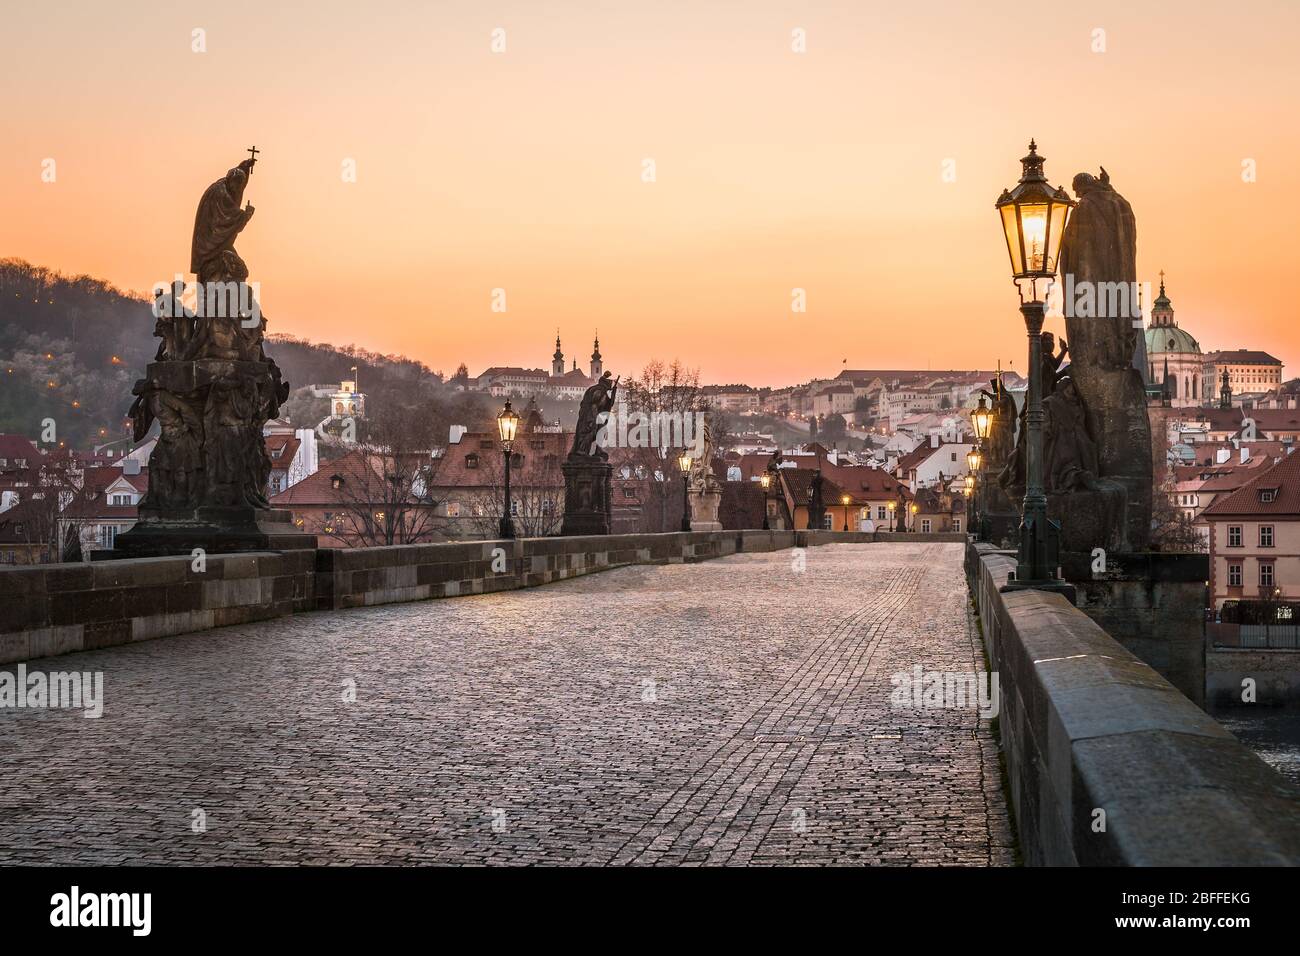 Statues on the empty Charles Bridge during sunset, Prague Stock Photo